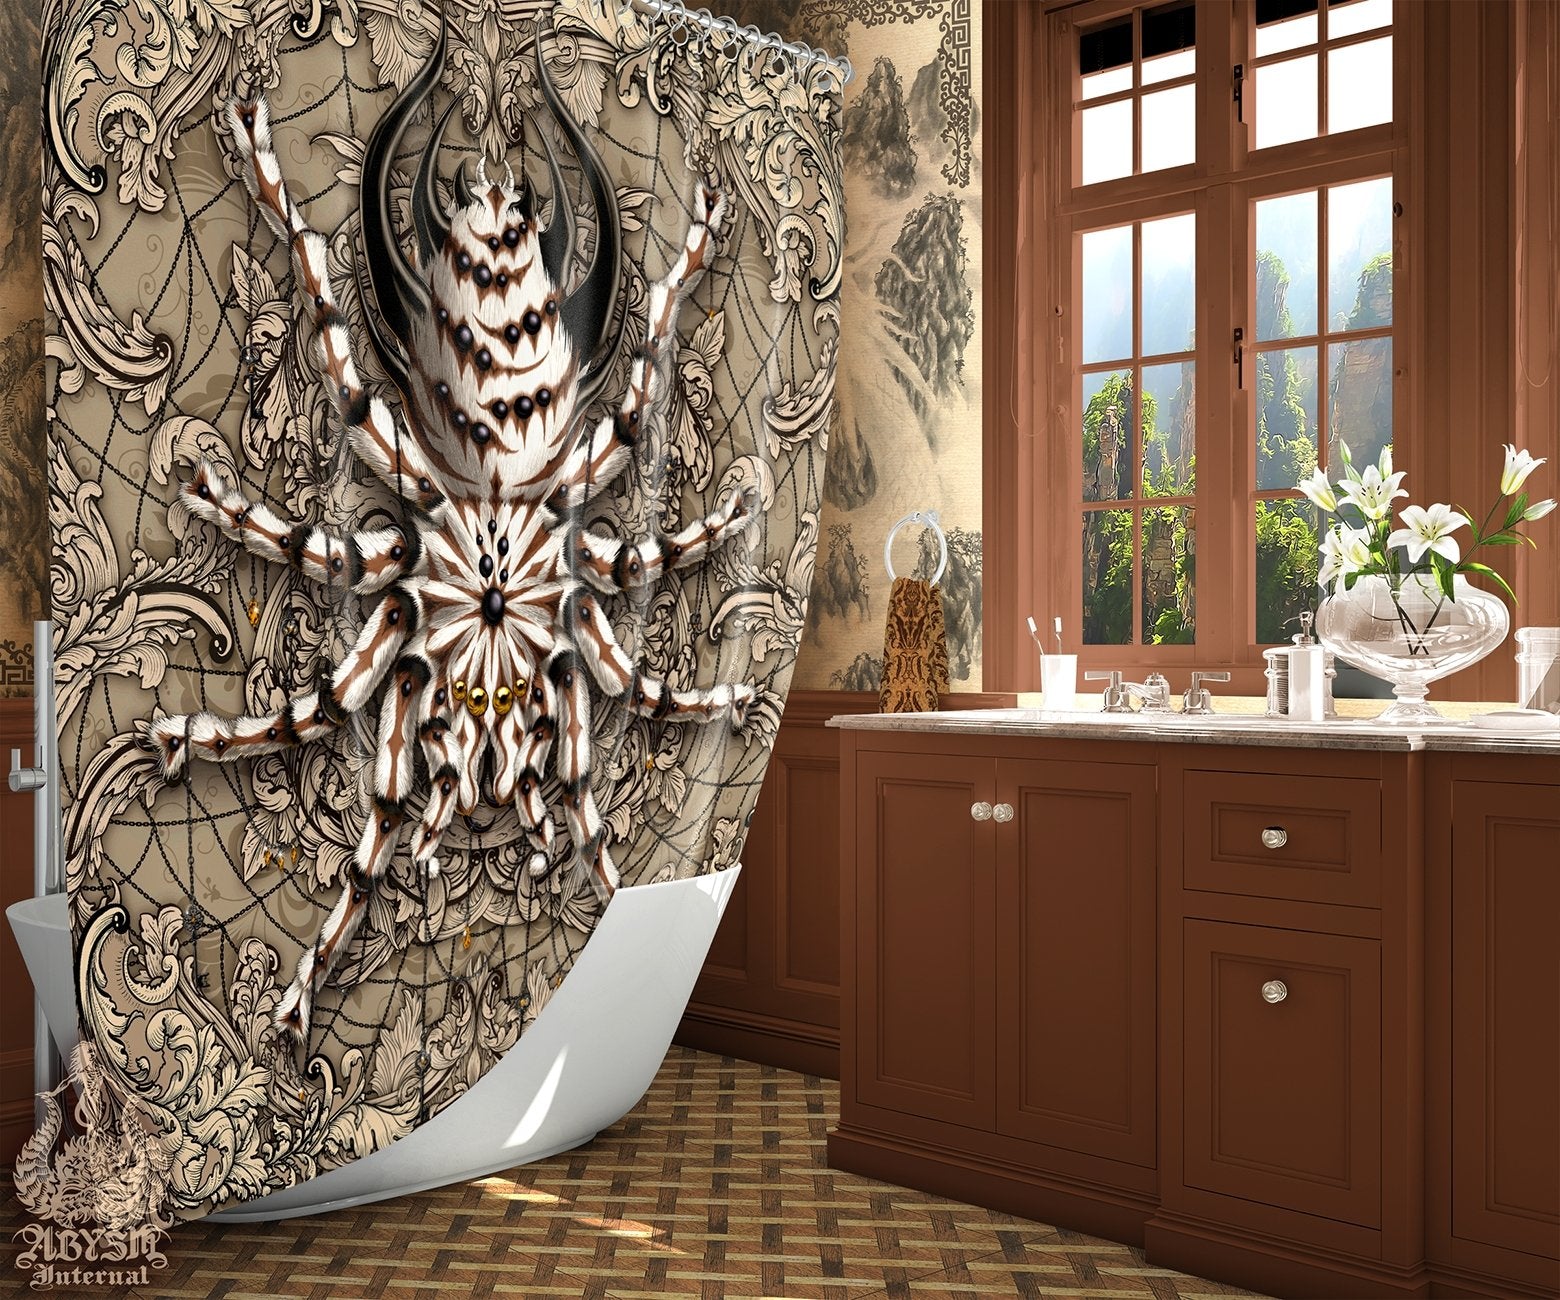 Indie Shower Curtain, Boho Bathroom Decor, Eclectic and Funky Home - Spider, Cream, Tarantula Art - Abysm Internal